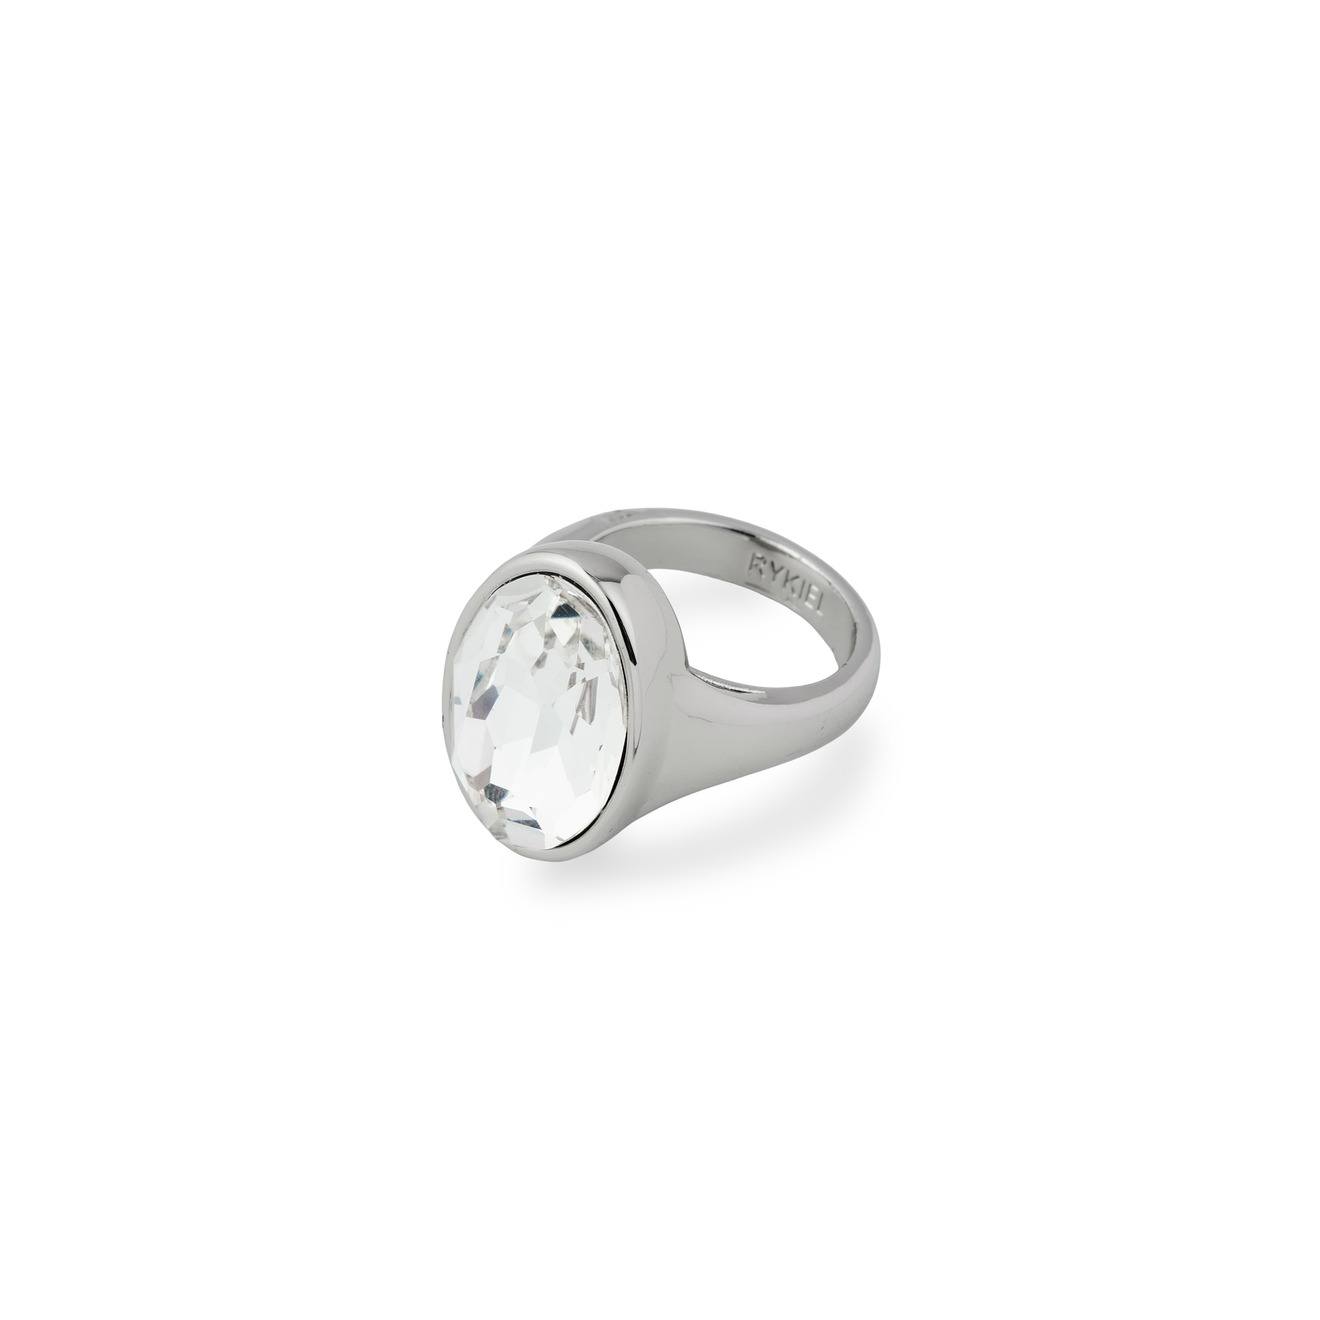 SONIA RYKIEL Объемное серебристое кольцо с кристаллом phenomenal studio серебристое кольцо с кристаллом star